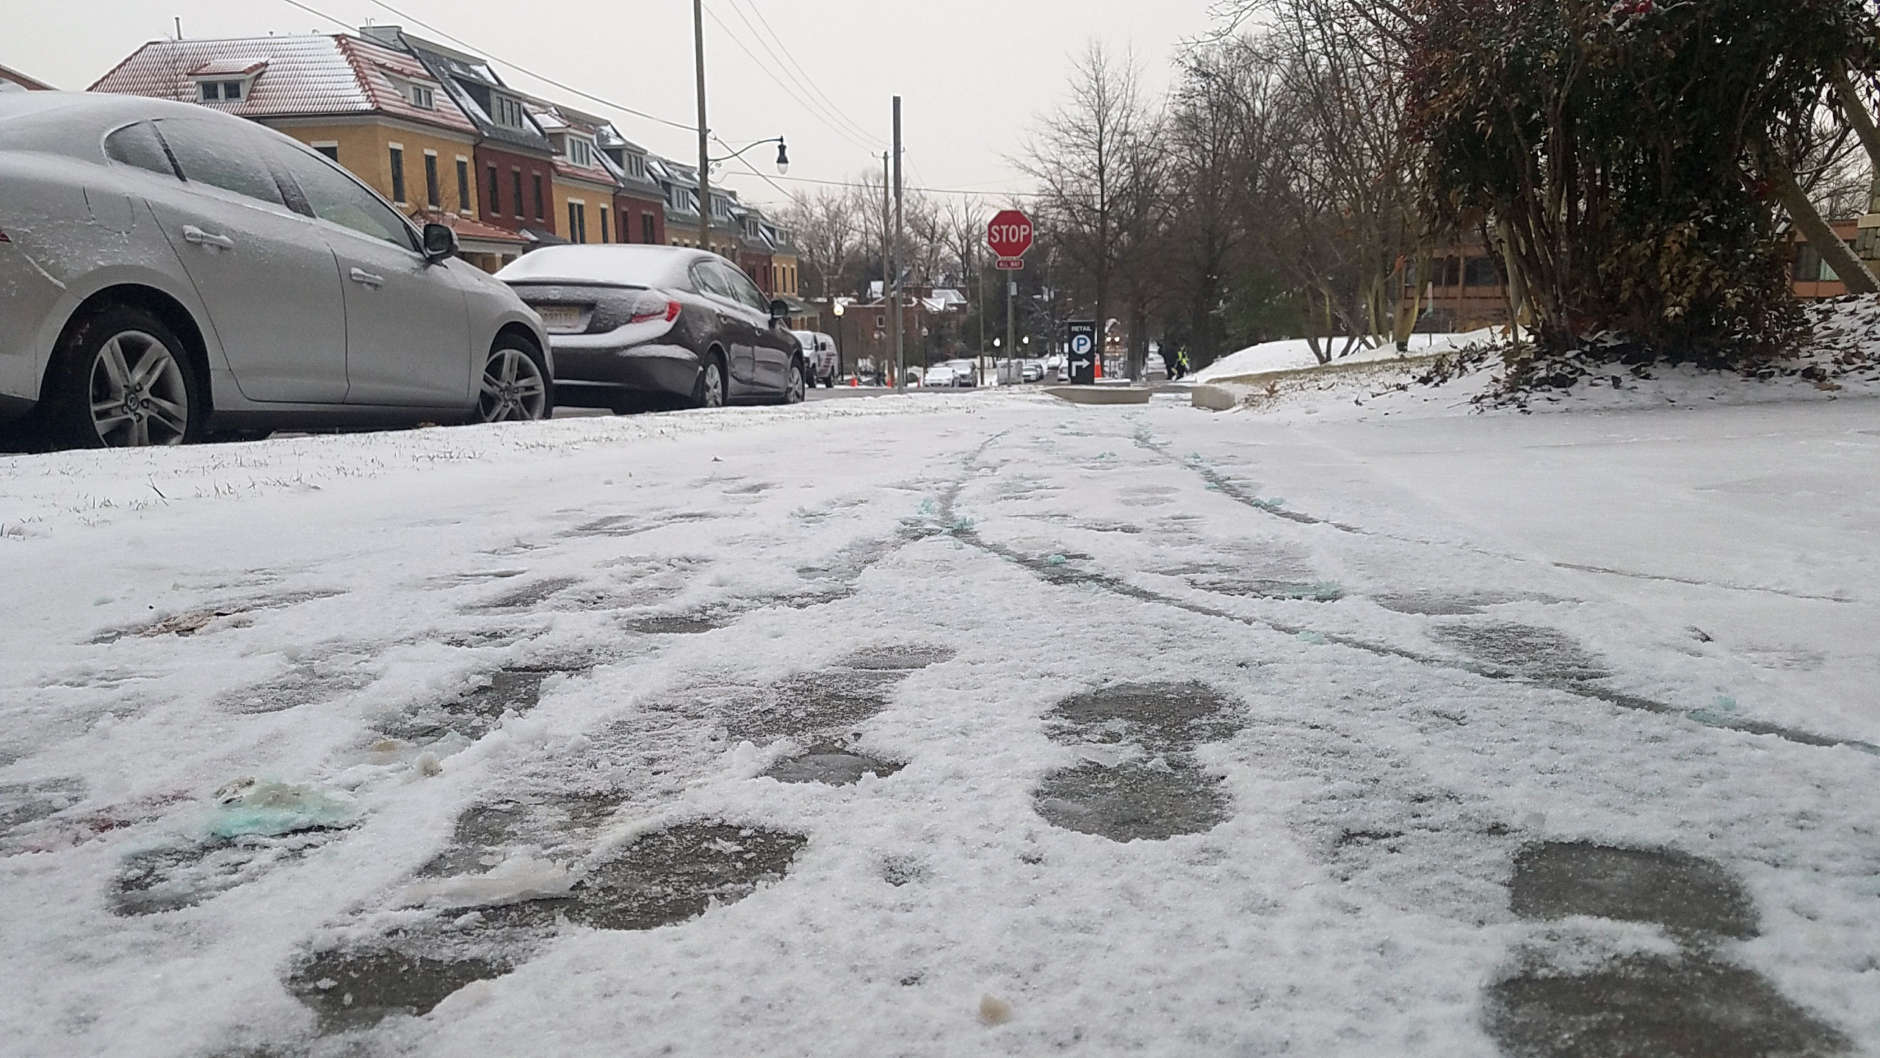 Footprints in the light snow that fell in Northwest D.C. Jan. 17. (WTOP/William Vitka)